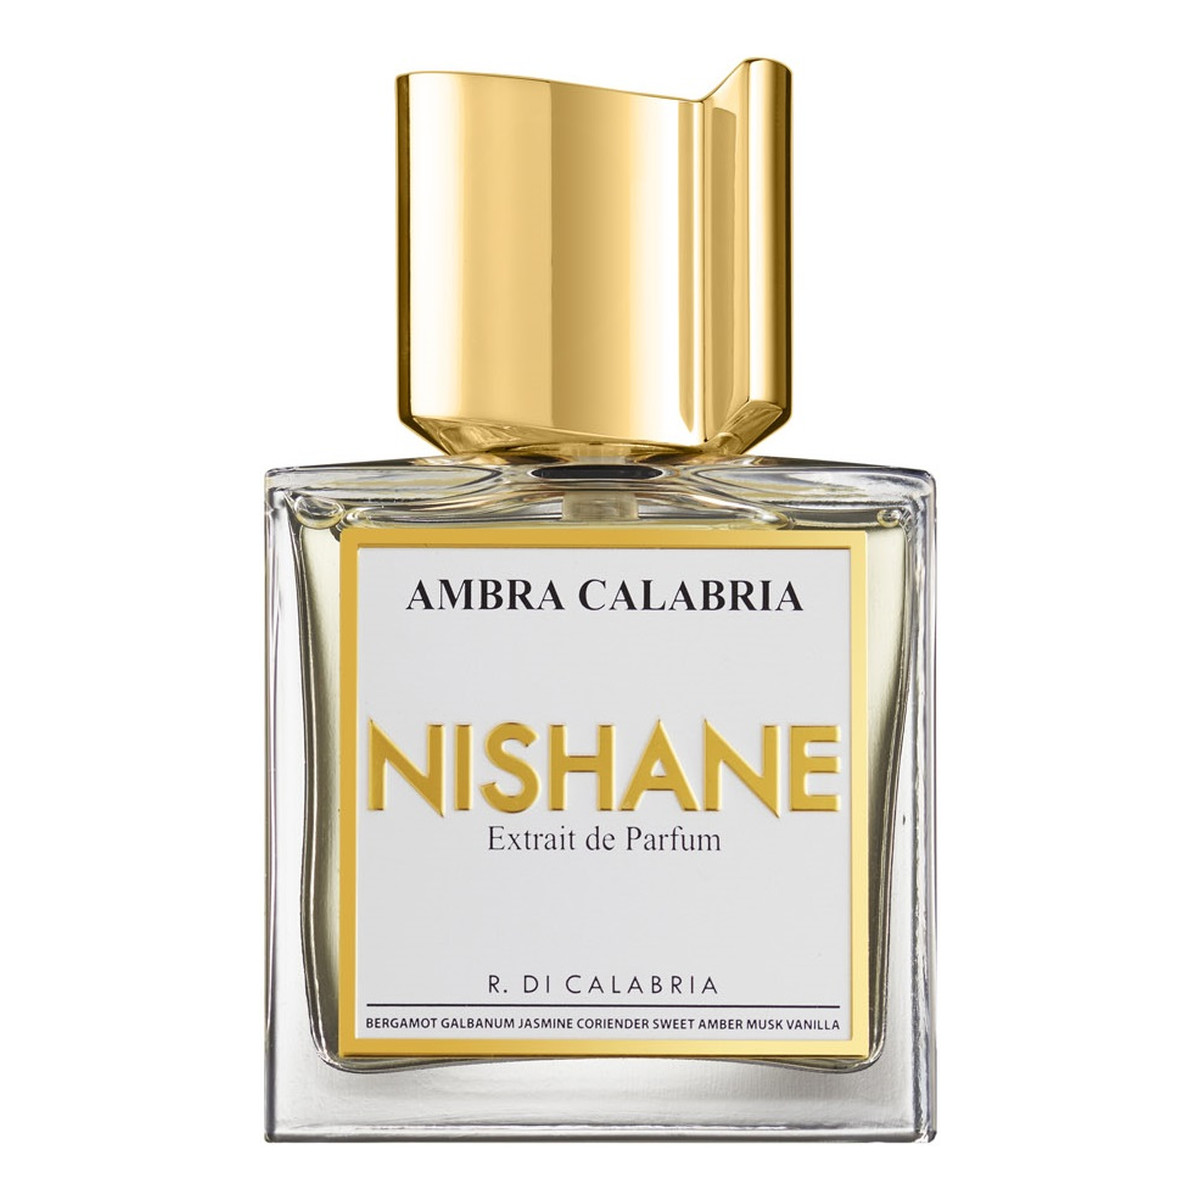 Nishane Ambra calabria ekstrakt perfum spray 50ml